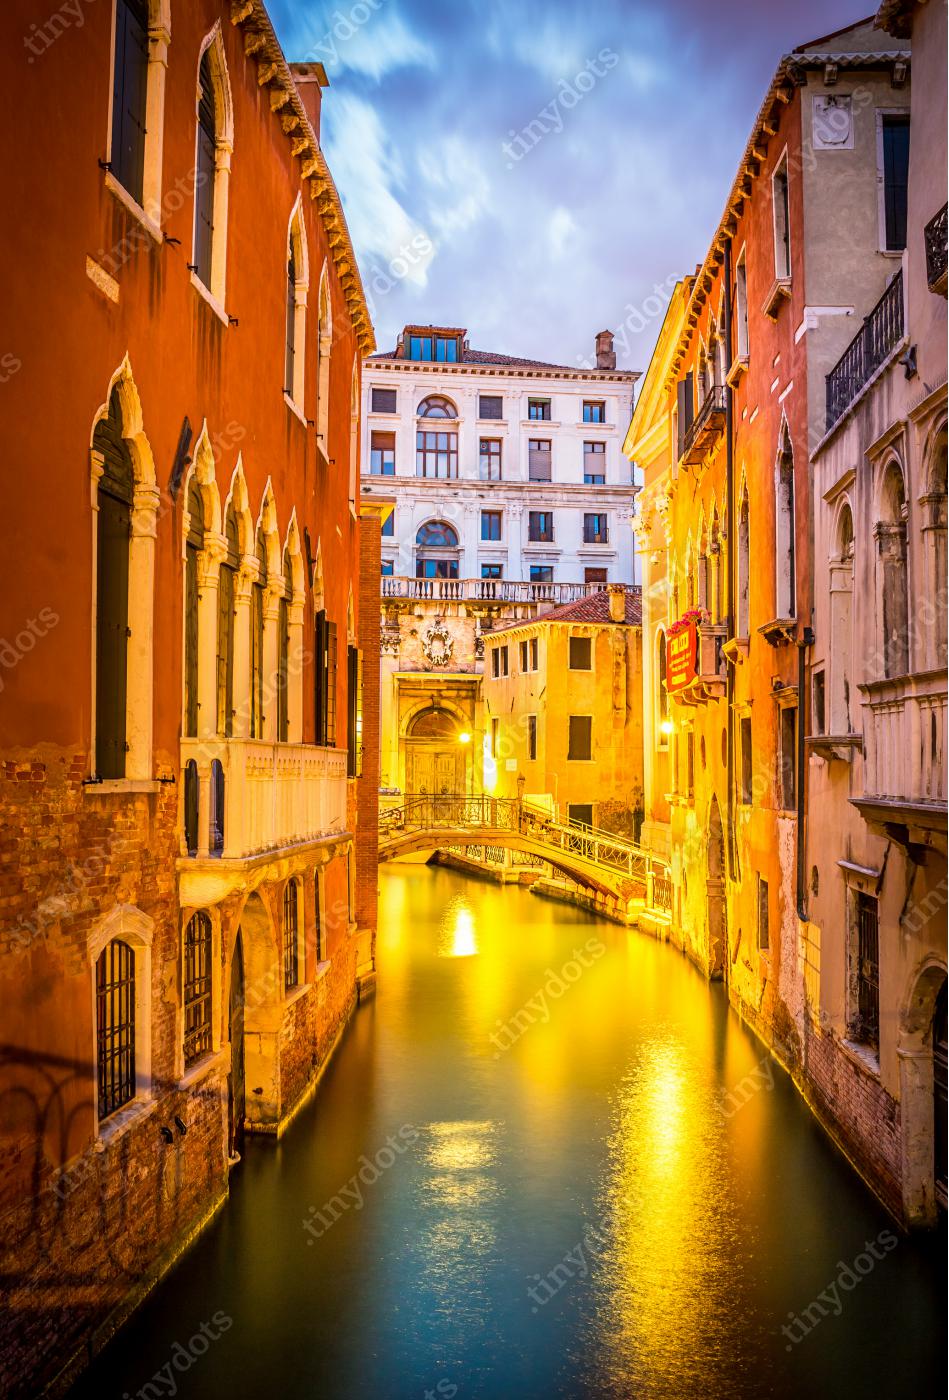 Fotobehang Smal kanaal in Venetië in de avond